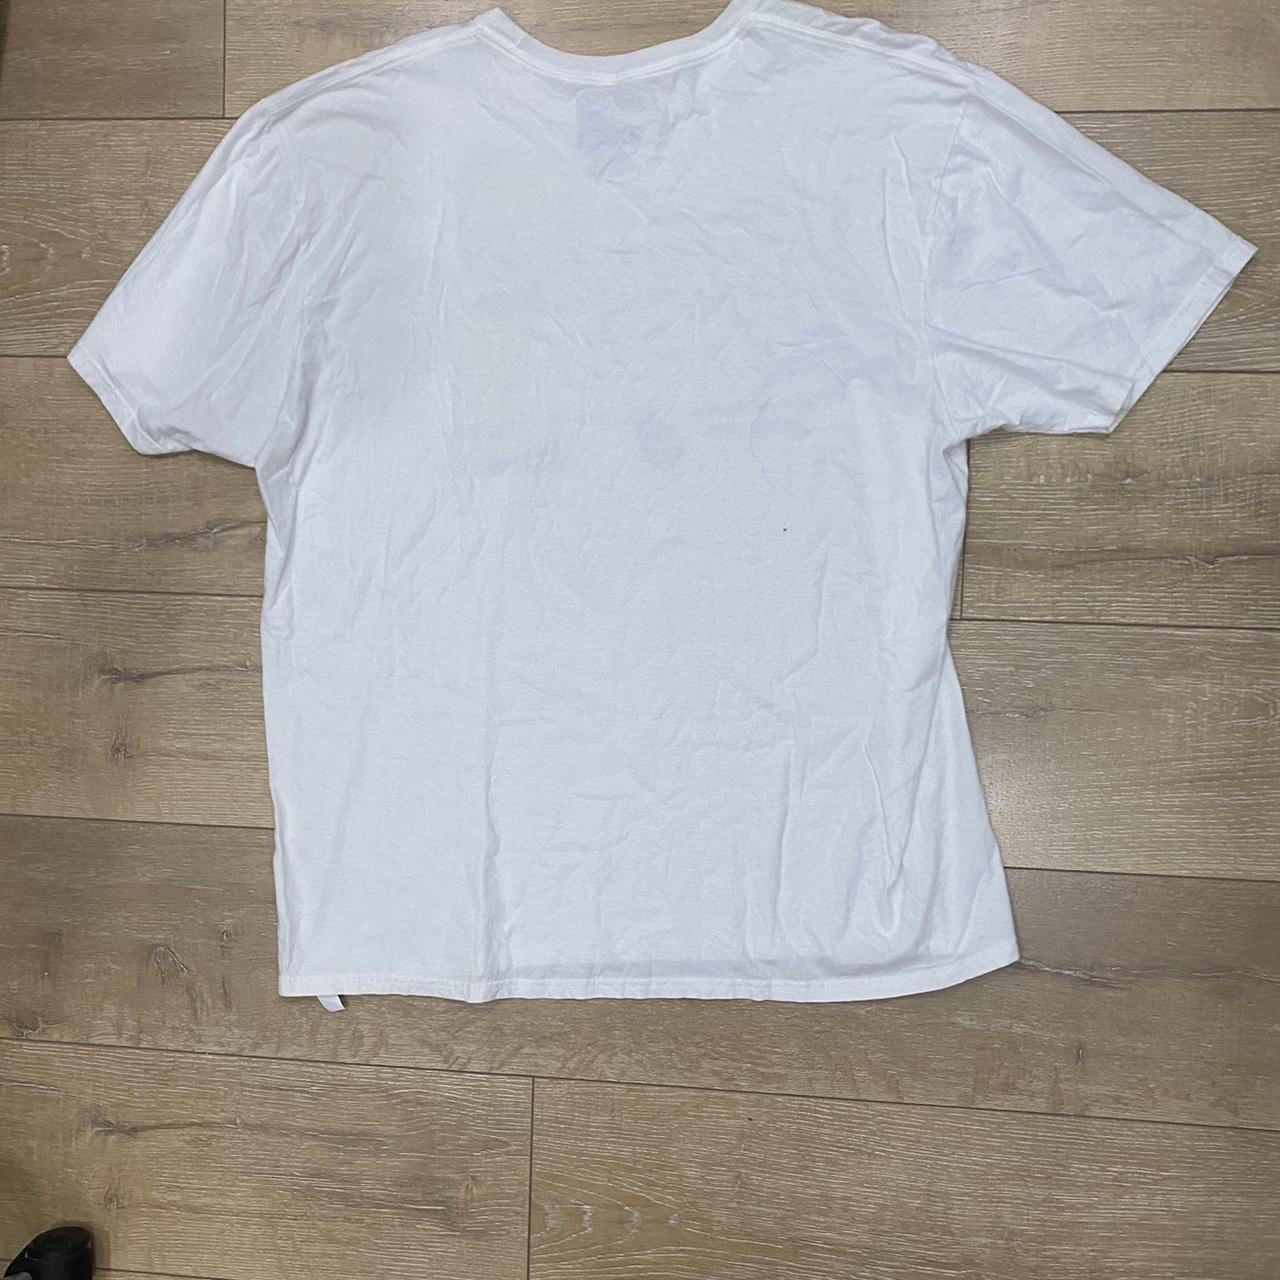 NBA Men's White T-shirt | Depop